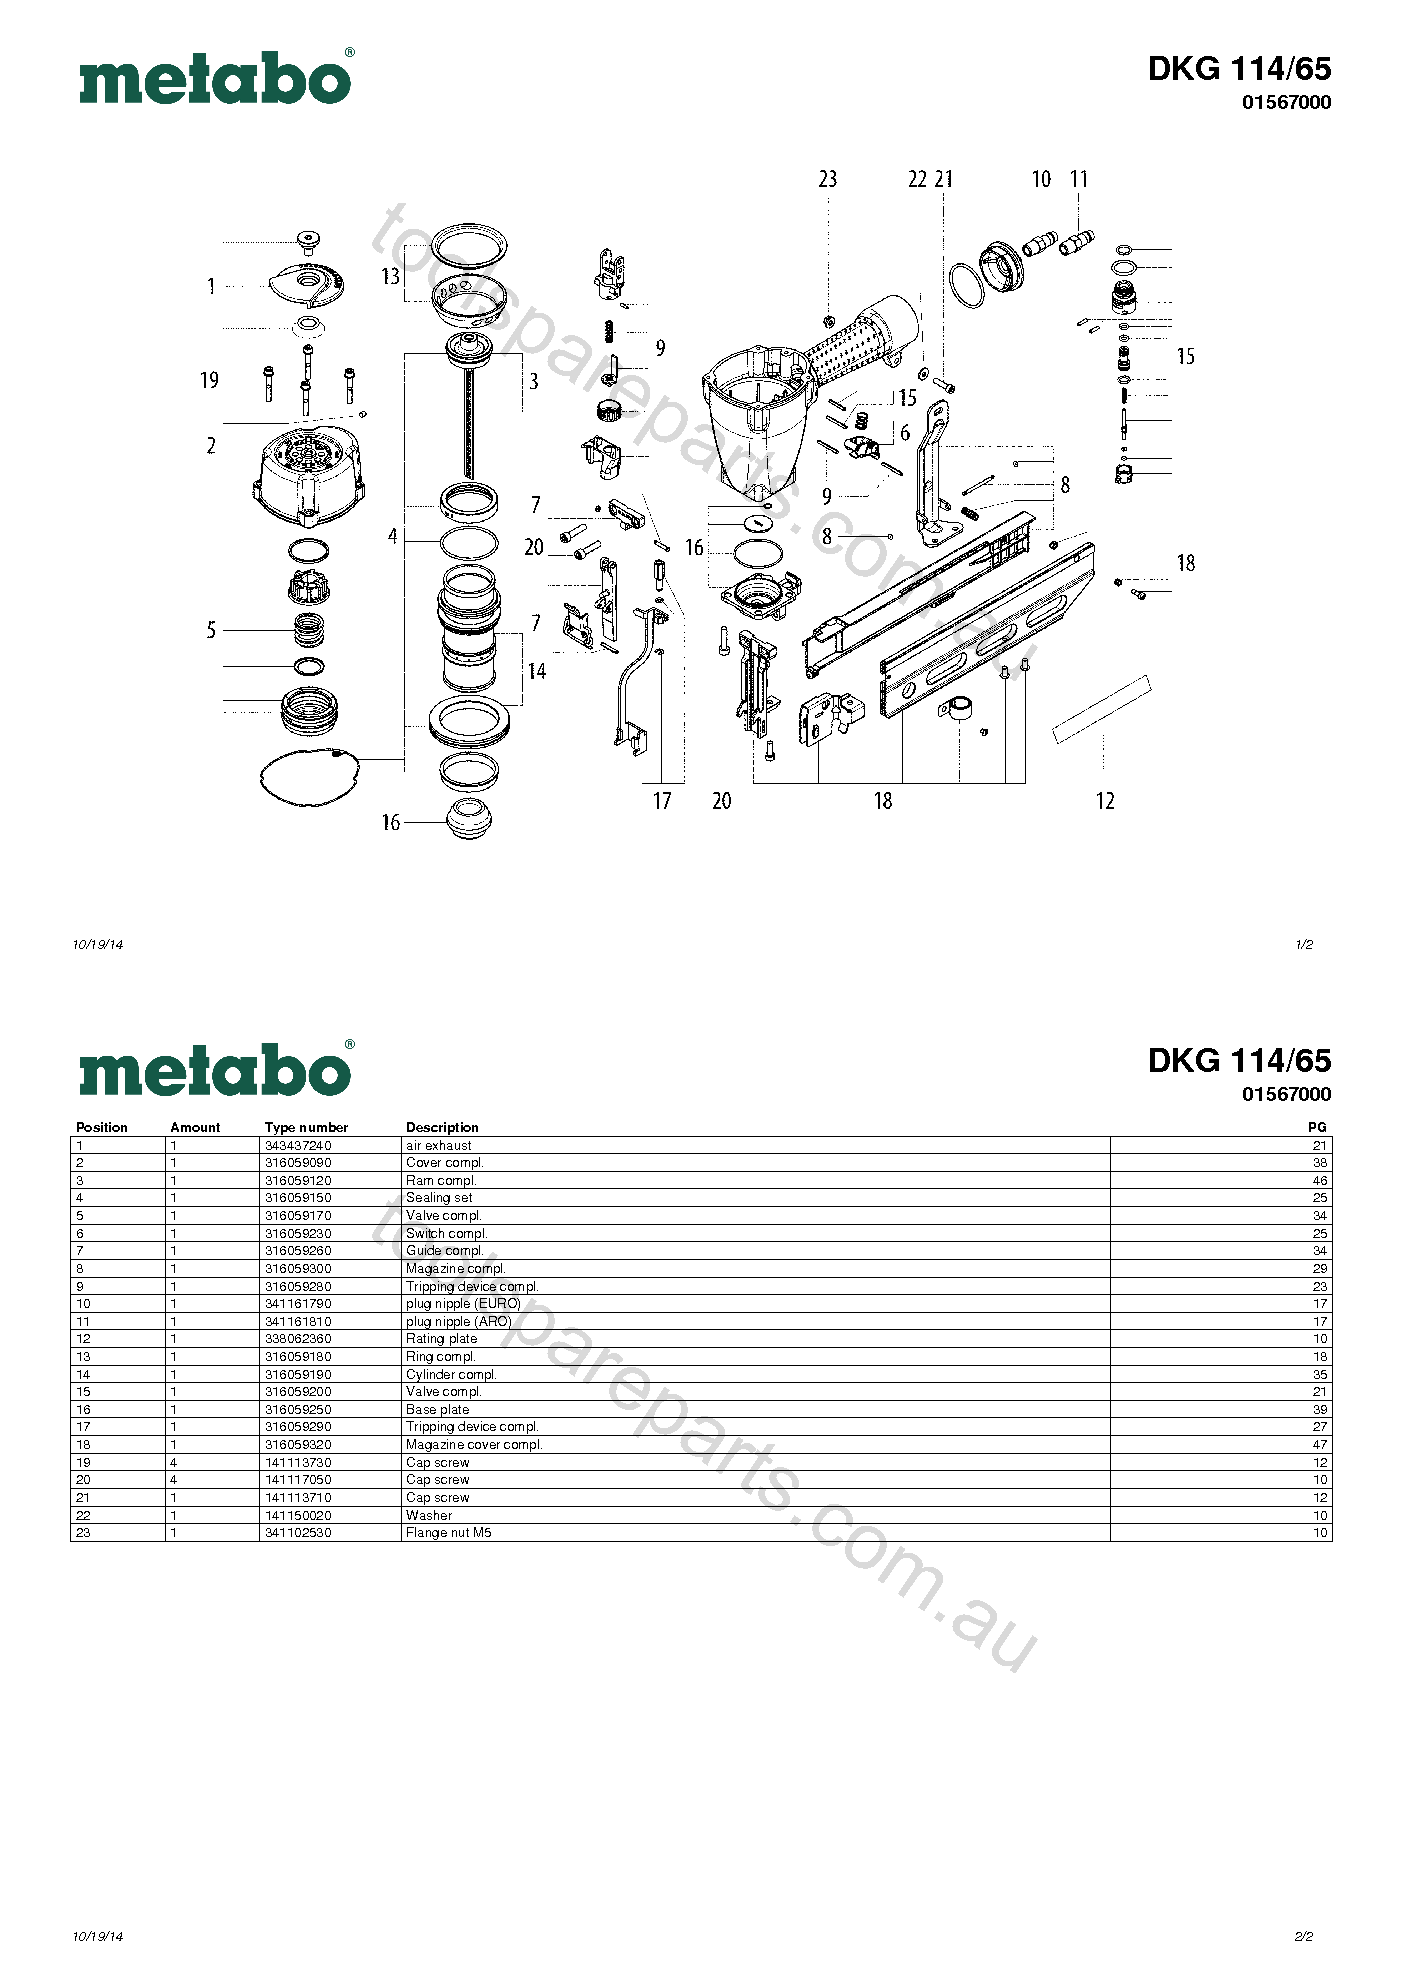 Metabo DKG 114/65 01567000  Diagram 1